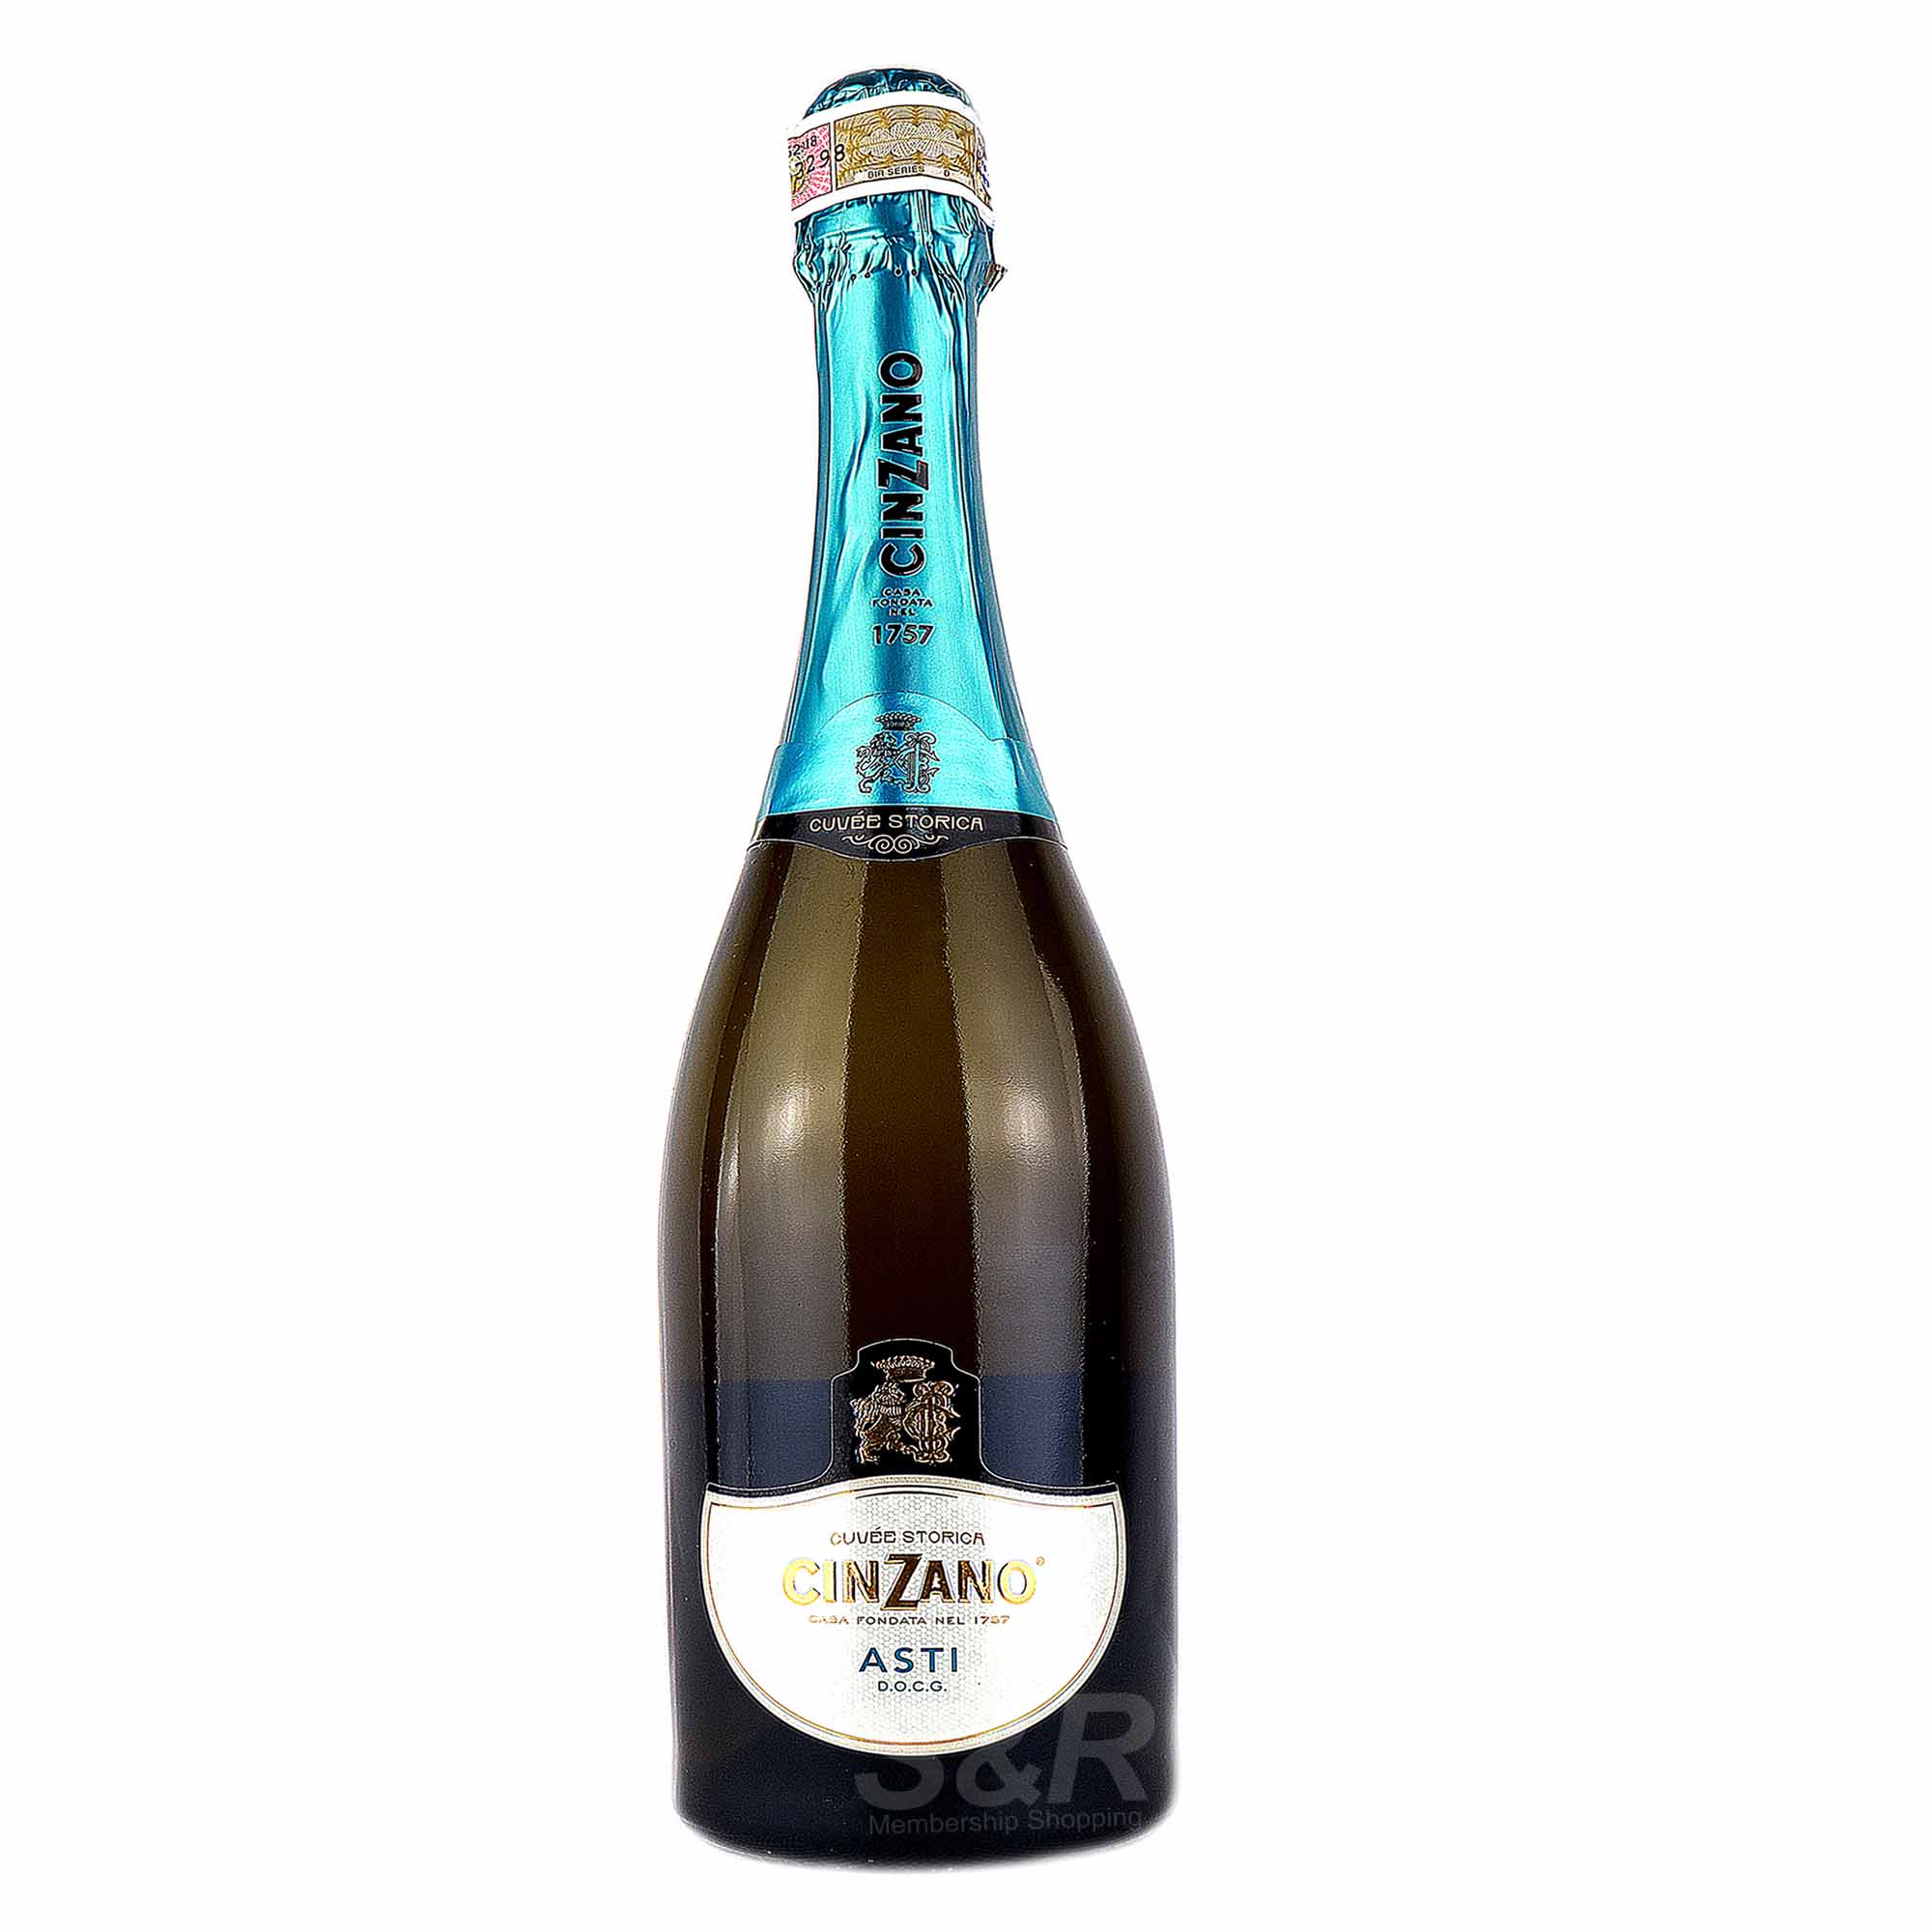 Cinzano Asti D.O.C.G. Sparkling Wine 750mL